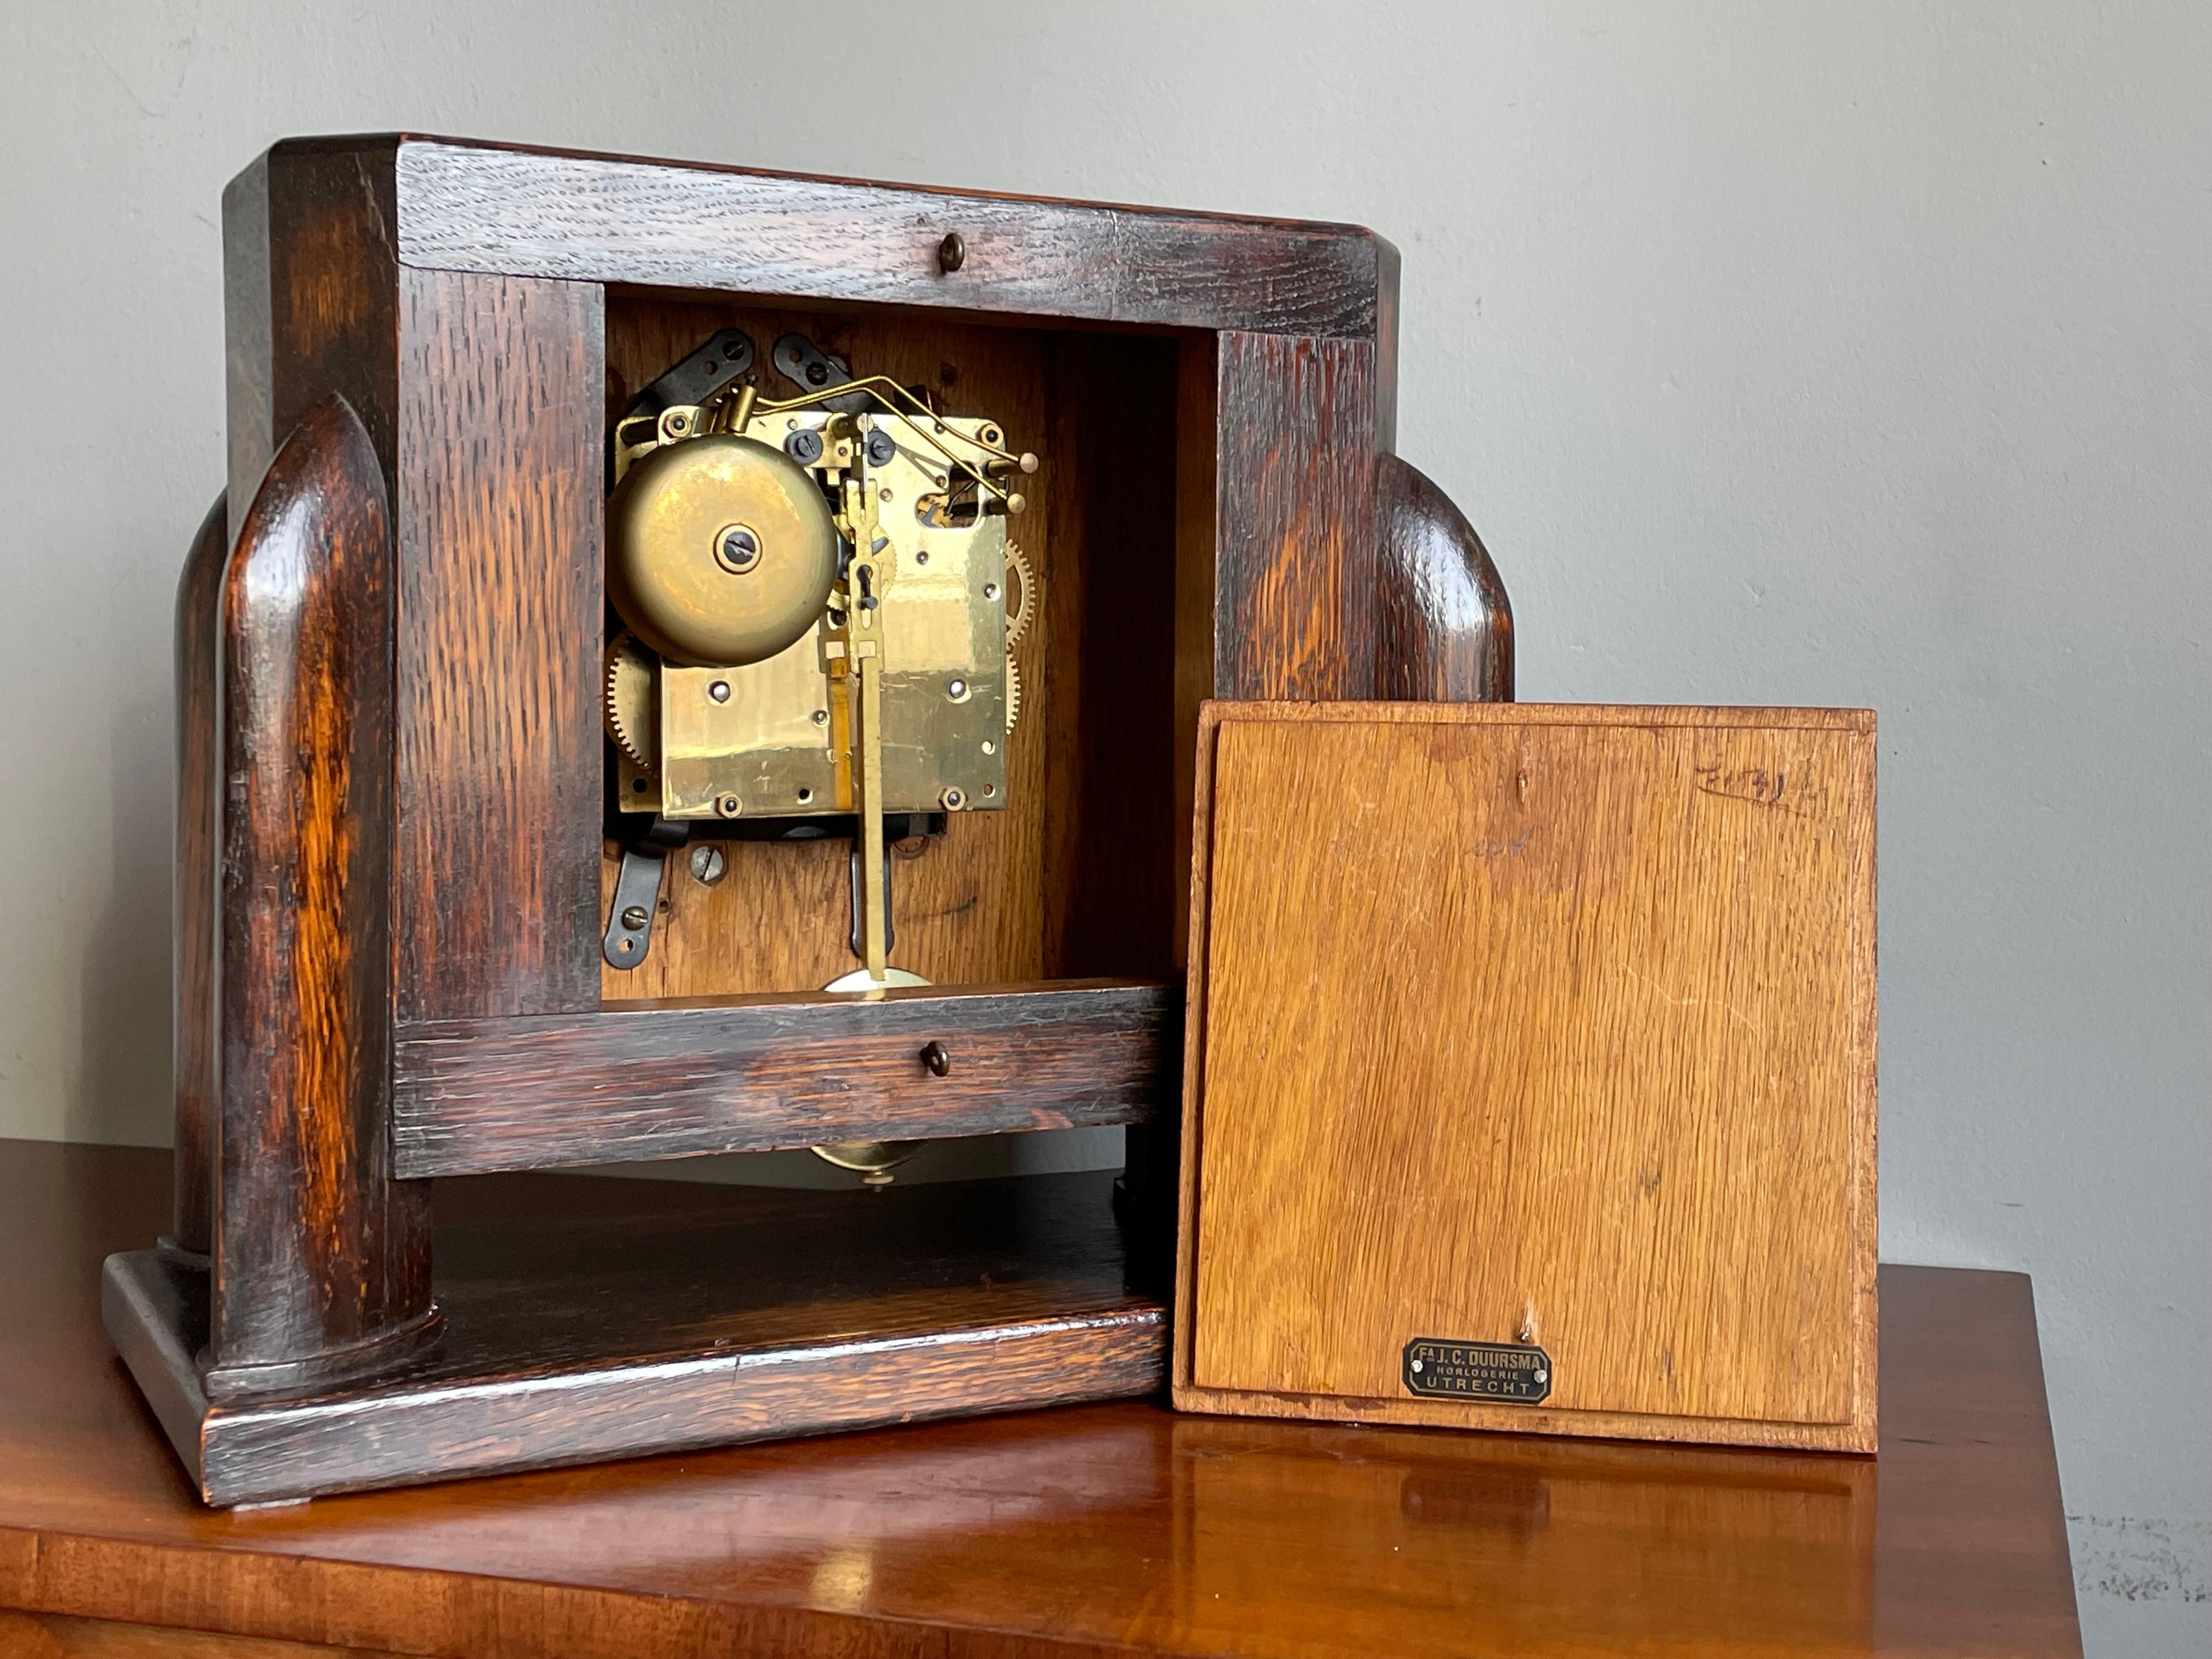 Dutch Arts & Crafts Oak Mantle / Desk Clock with Stunning Bronze Dial Face 1915 For Sale 4